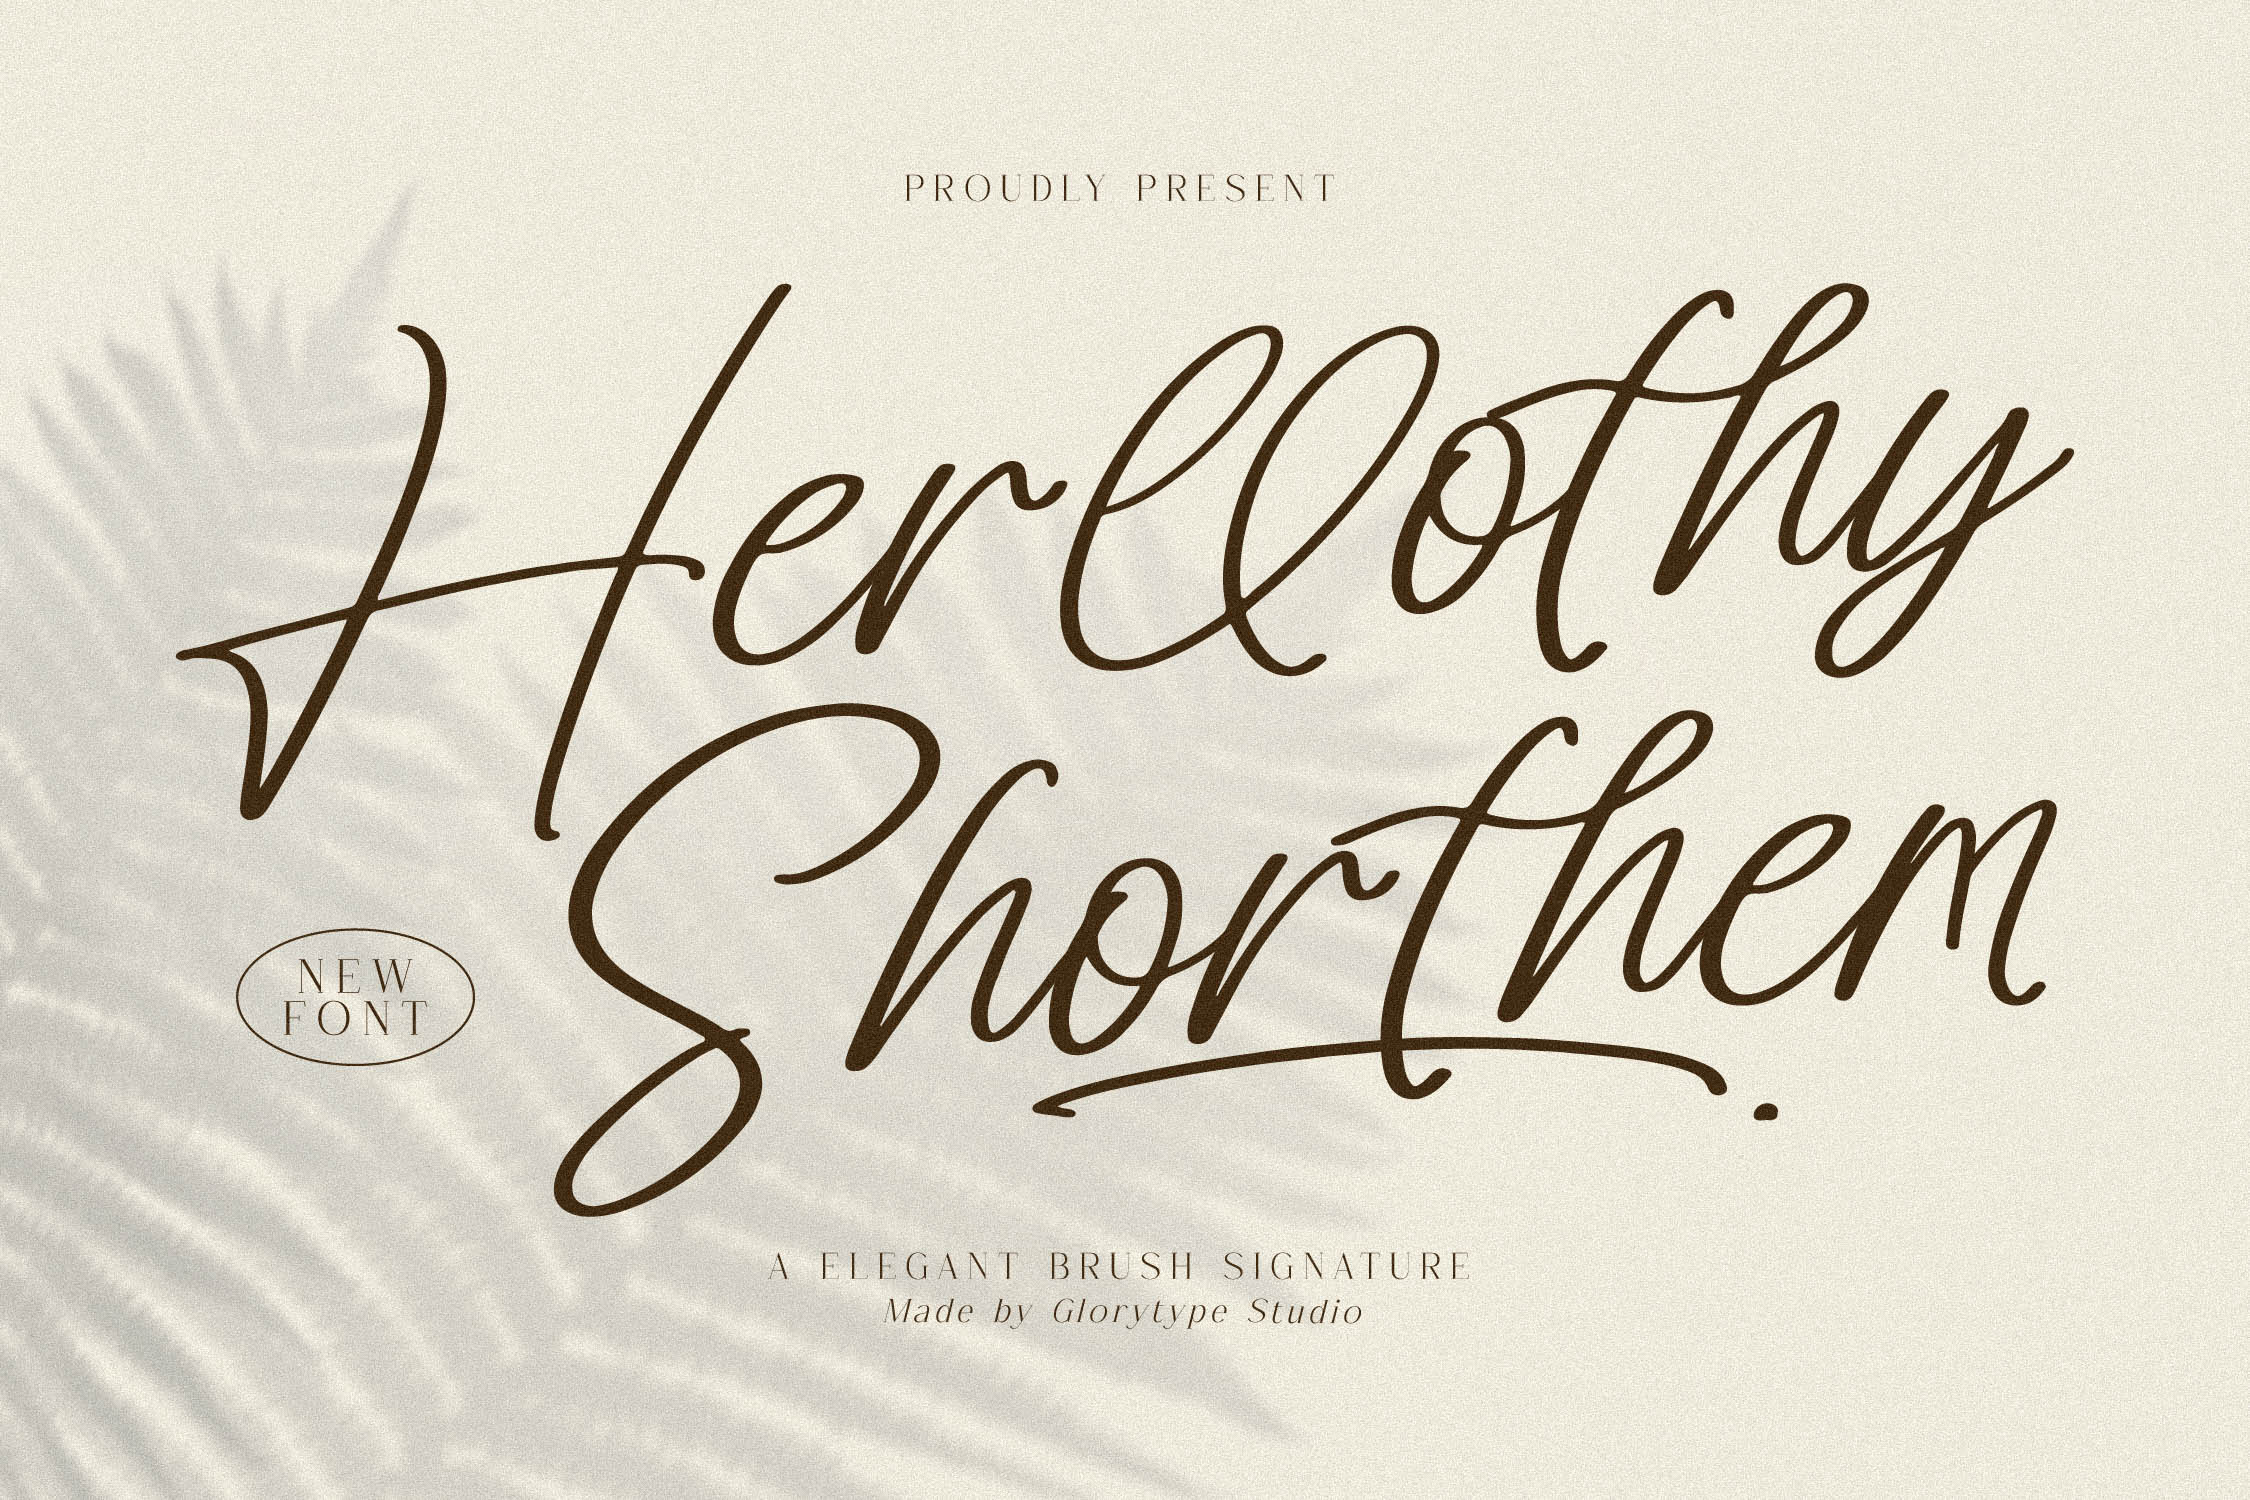 Herllothy Shorthem Free Font